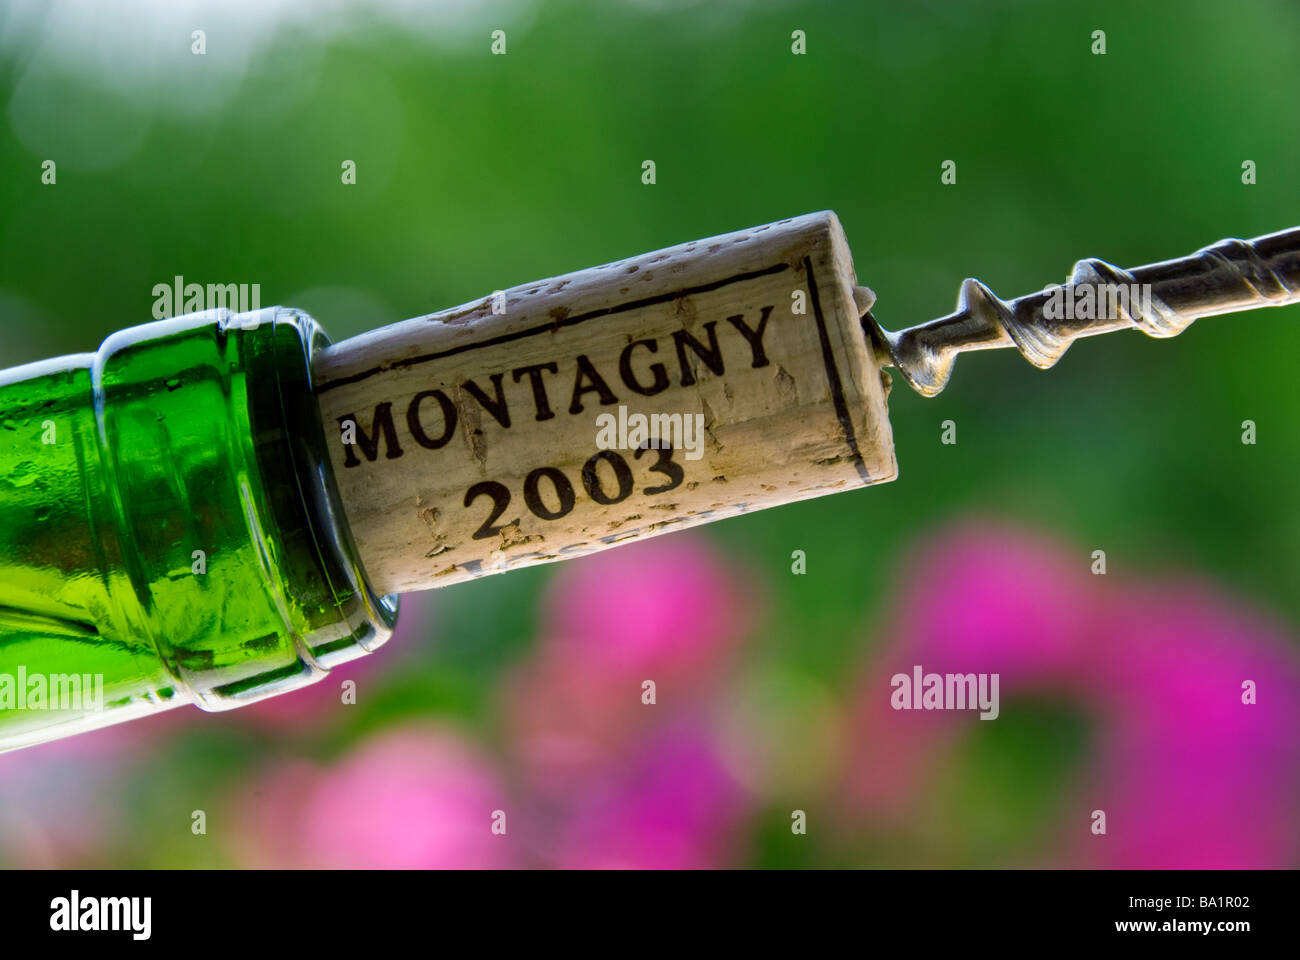 MONTAGNY BURGUNDY WINE Corkscrew pulling a cork from a bottle of Montagny white burgundy wine 2003 Côte Chalonnaise France Stock Photo